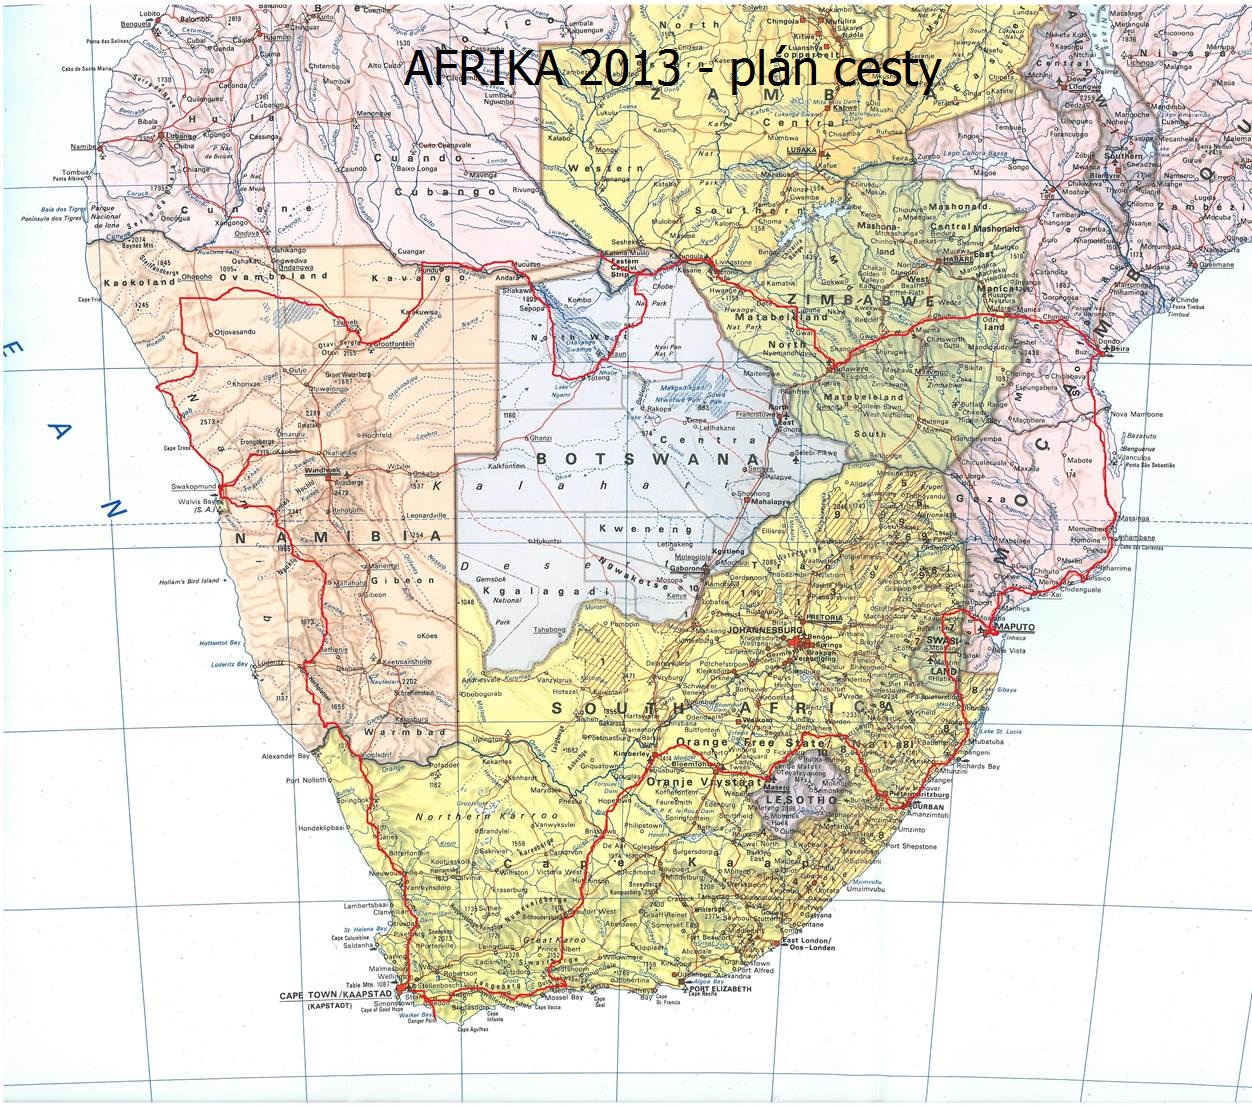 Hartl Afrika 2013 - plán cesty verze 04062013